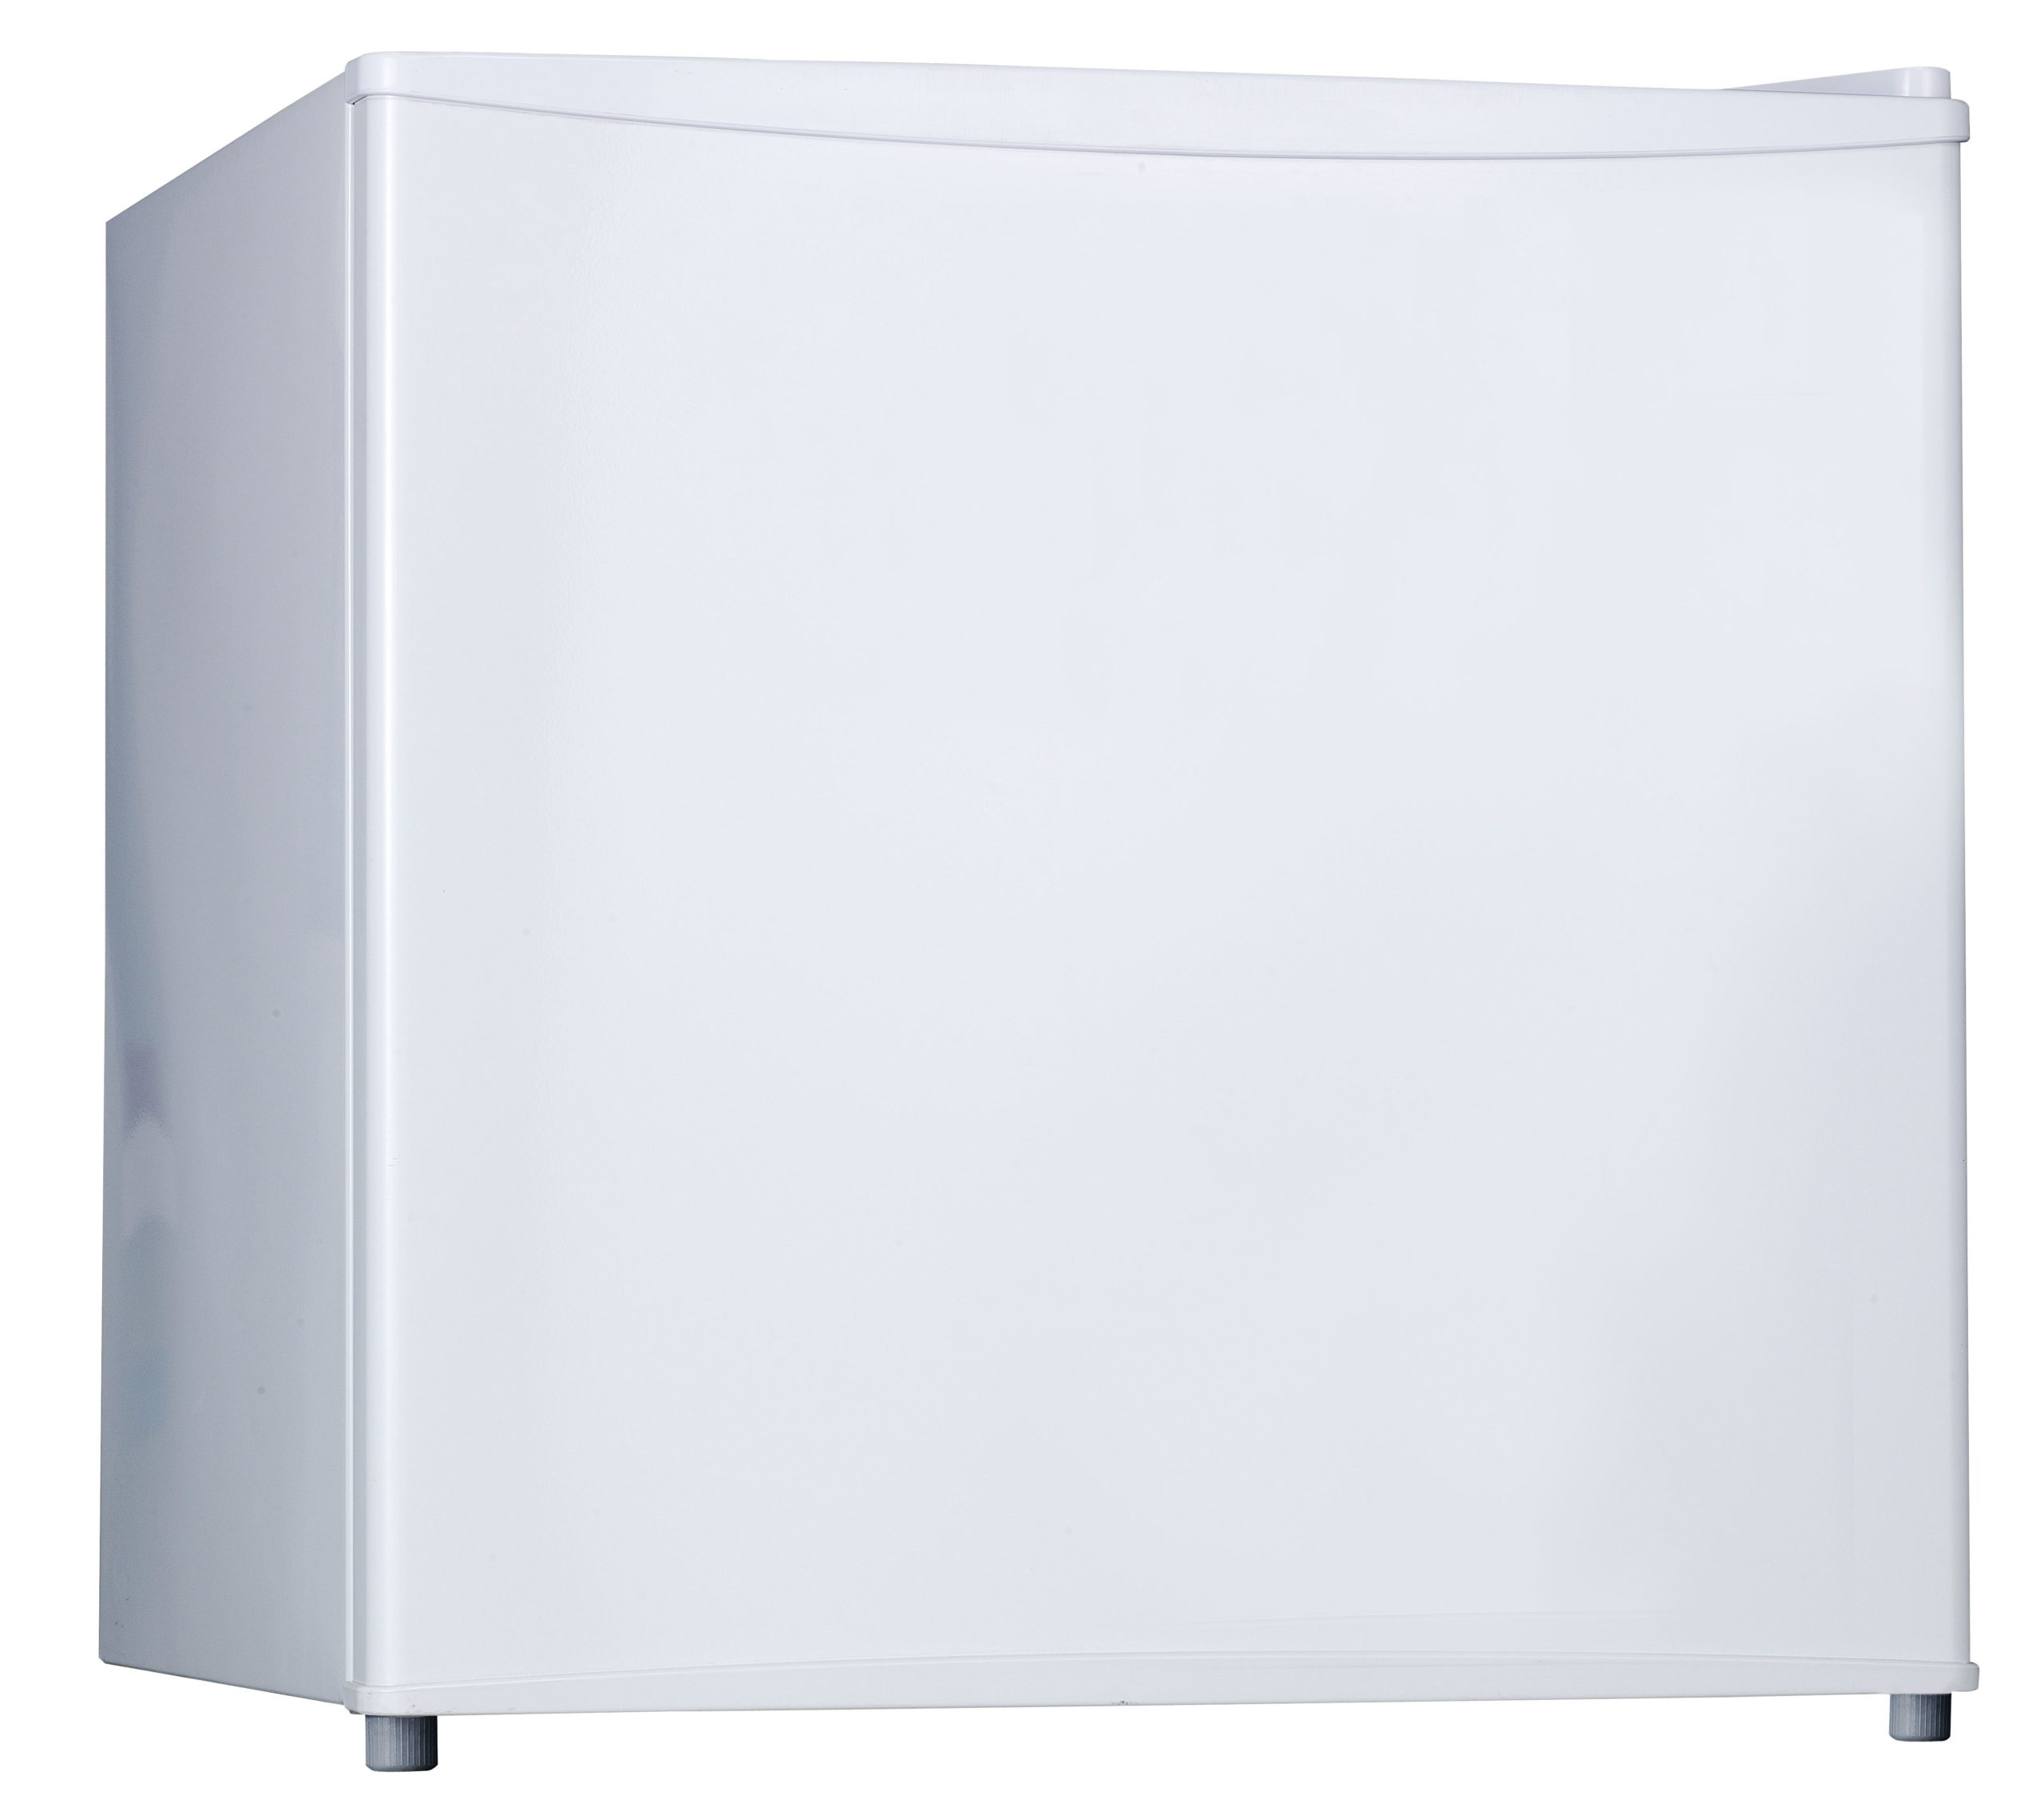 SILVA-HOMELINE KB 1550 Kühlschrank weiß) cm (F, hoch, 49,2